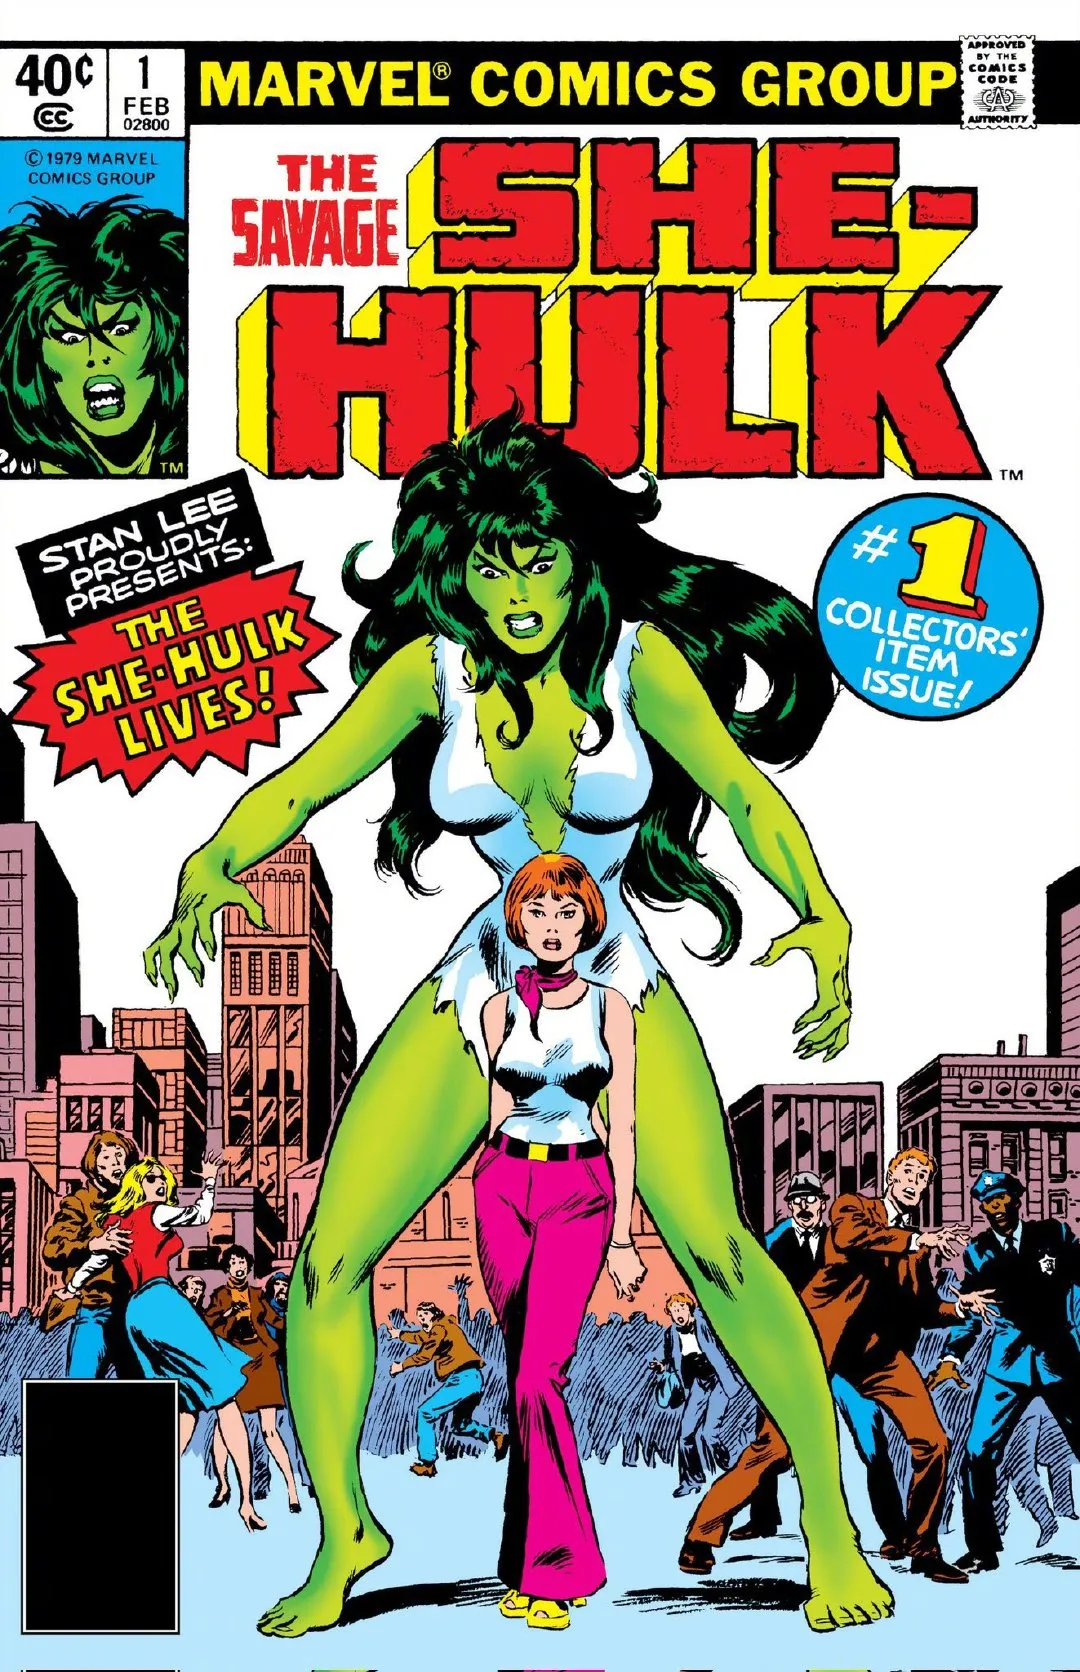 Marvel's new drama 'She-Hulk' new art poster, comic VS live-action | FMV6